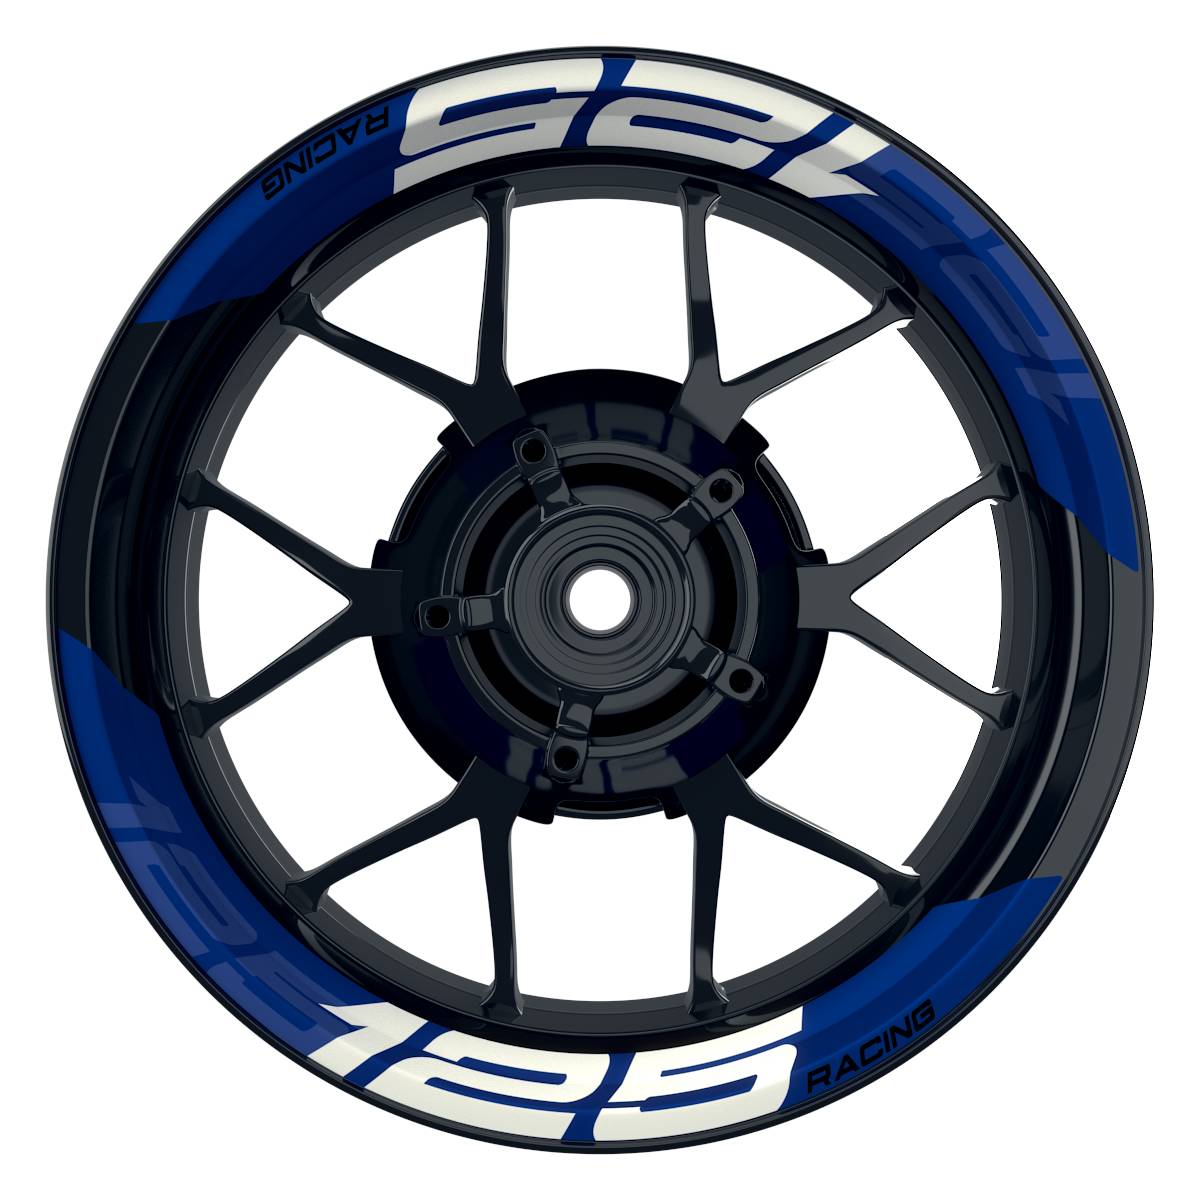 Wheelsticker Felgenaufkleber KTM Racing 125 einfarbig V2 blau Frontansicht